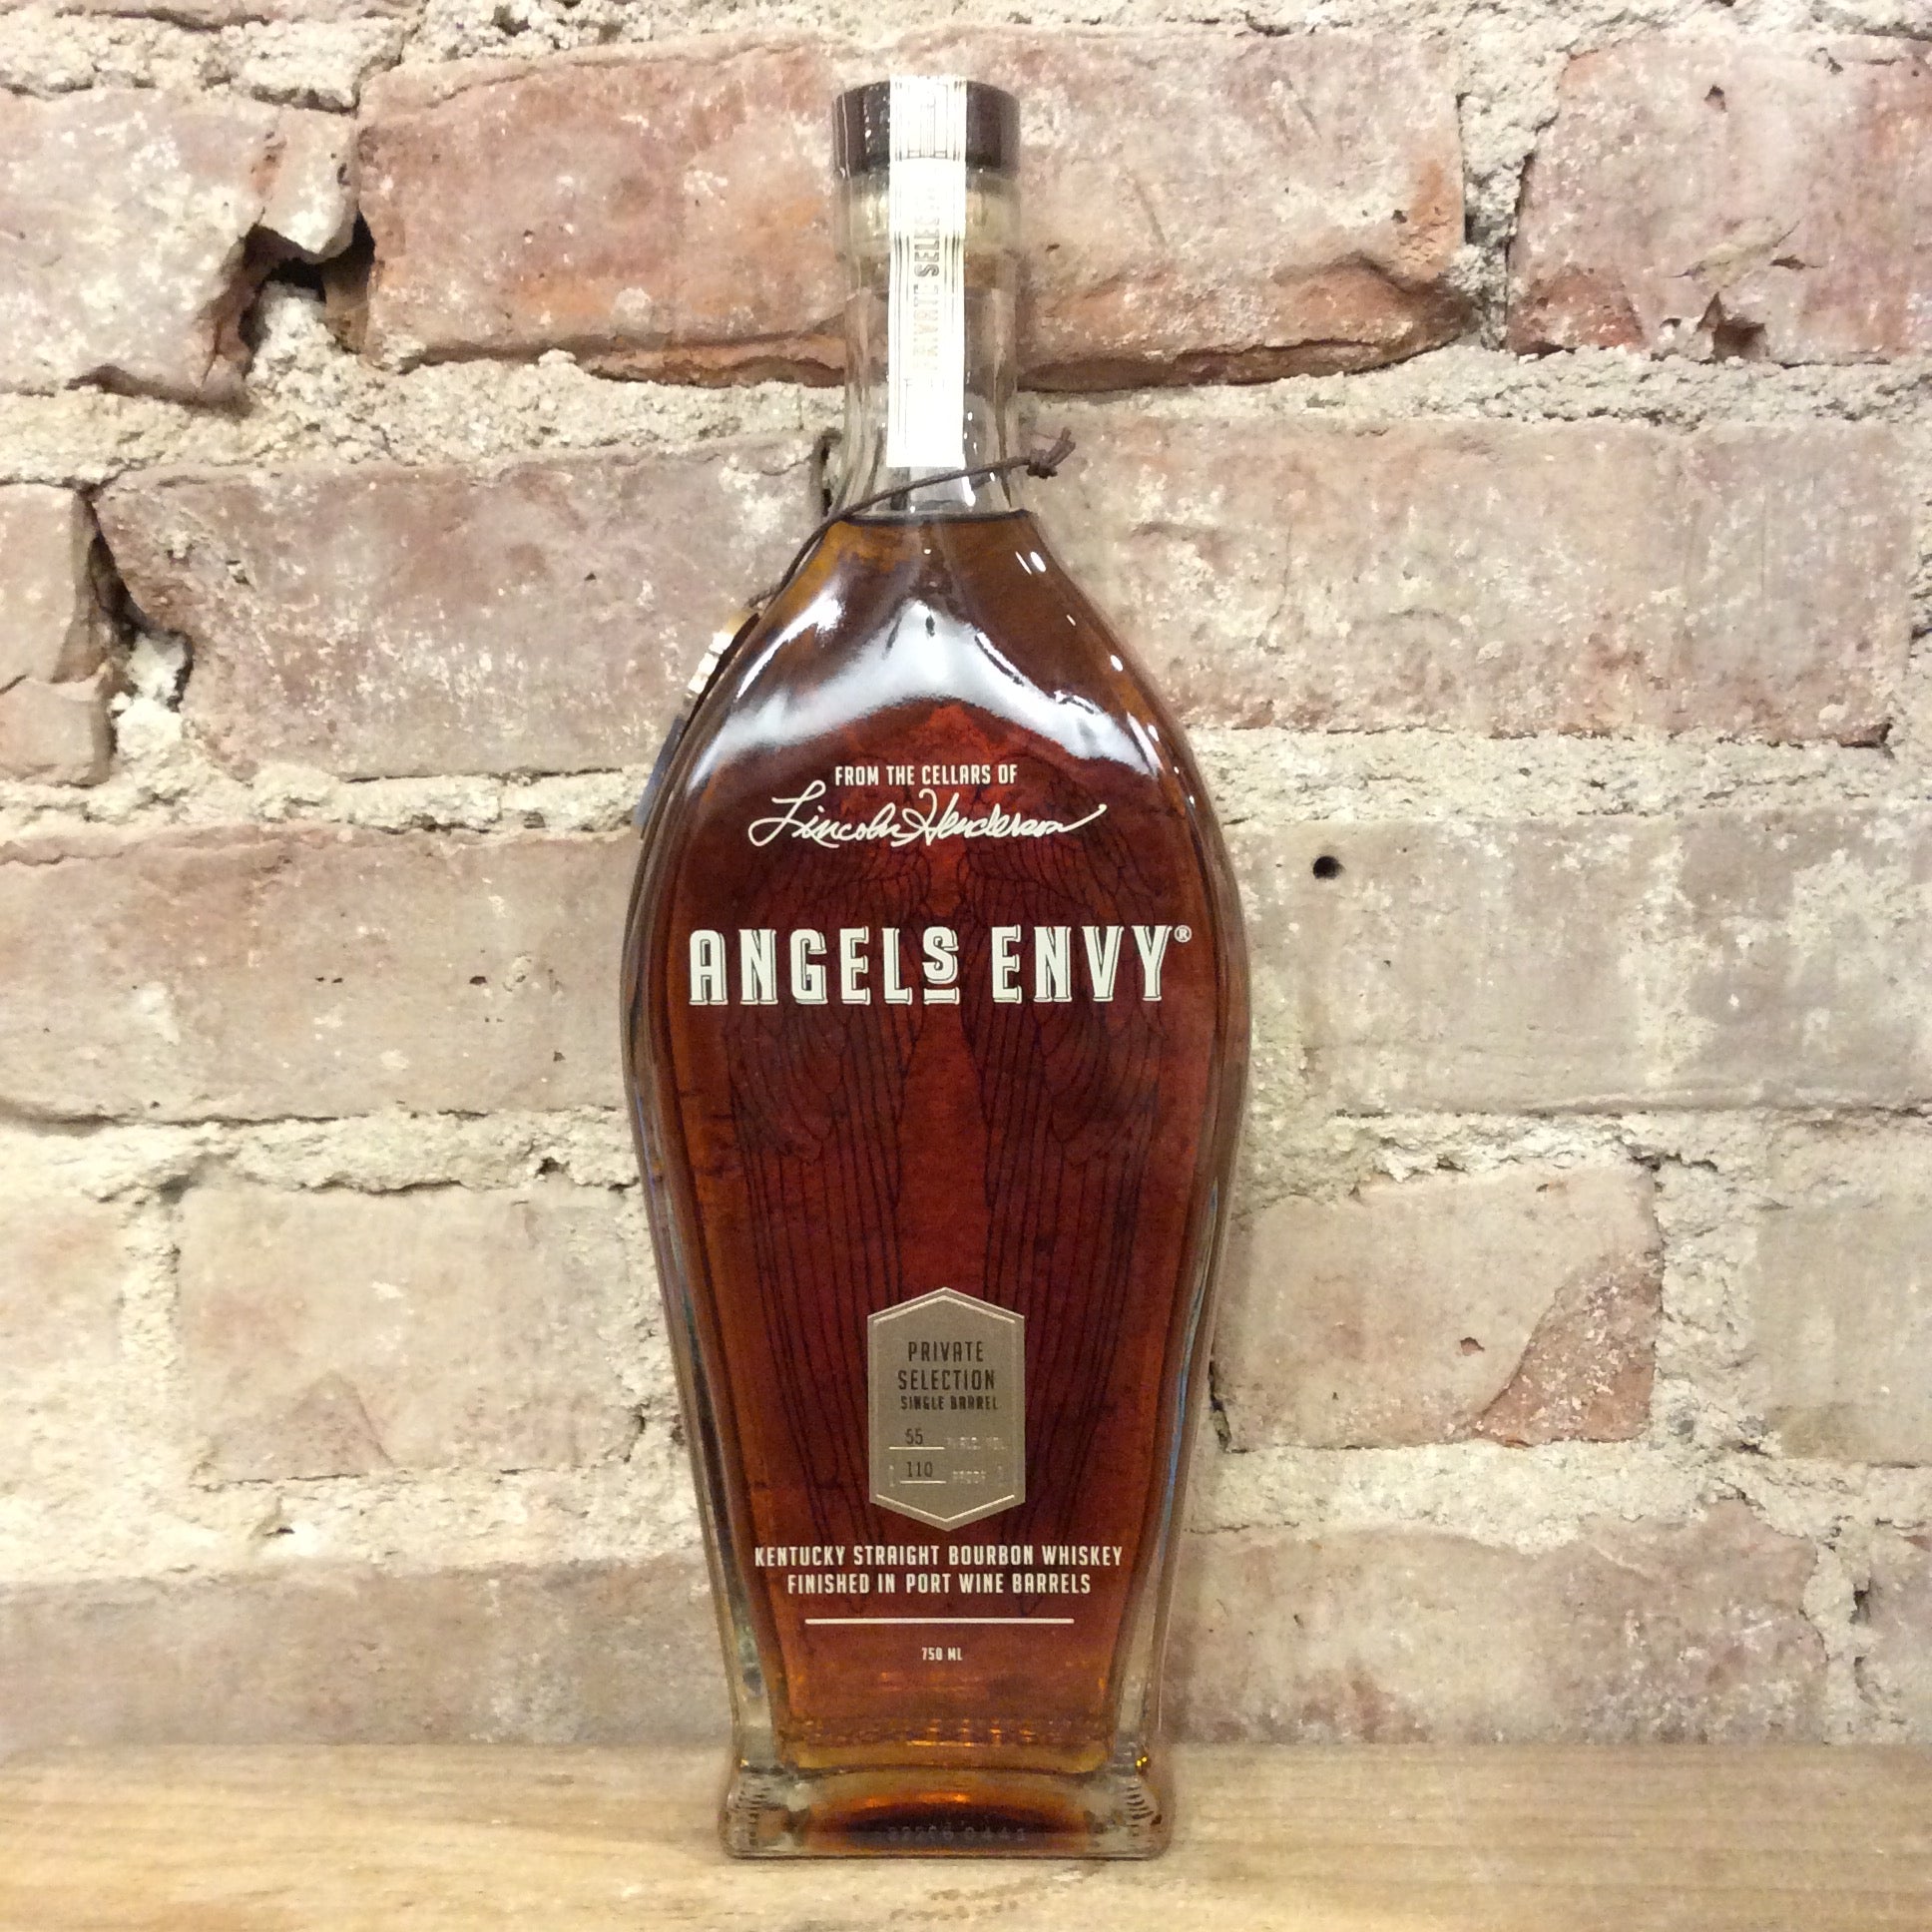 Blanton The Original Single Barrel Bourbon Whiskey 750 ml : :  Epicerie